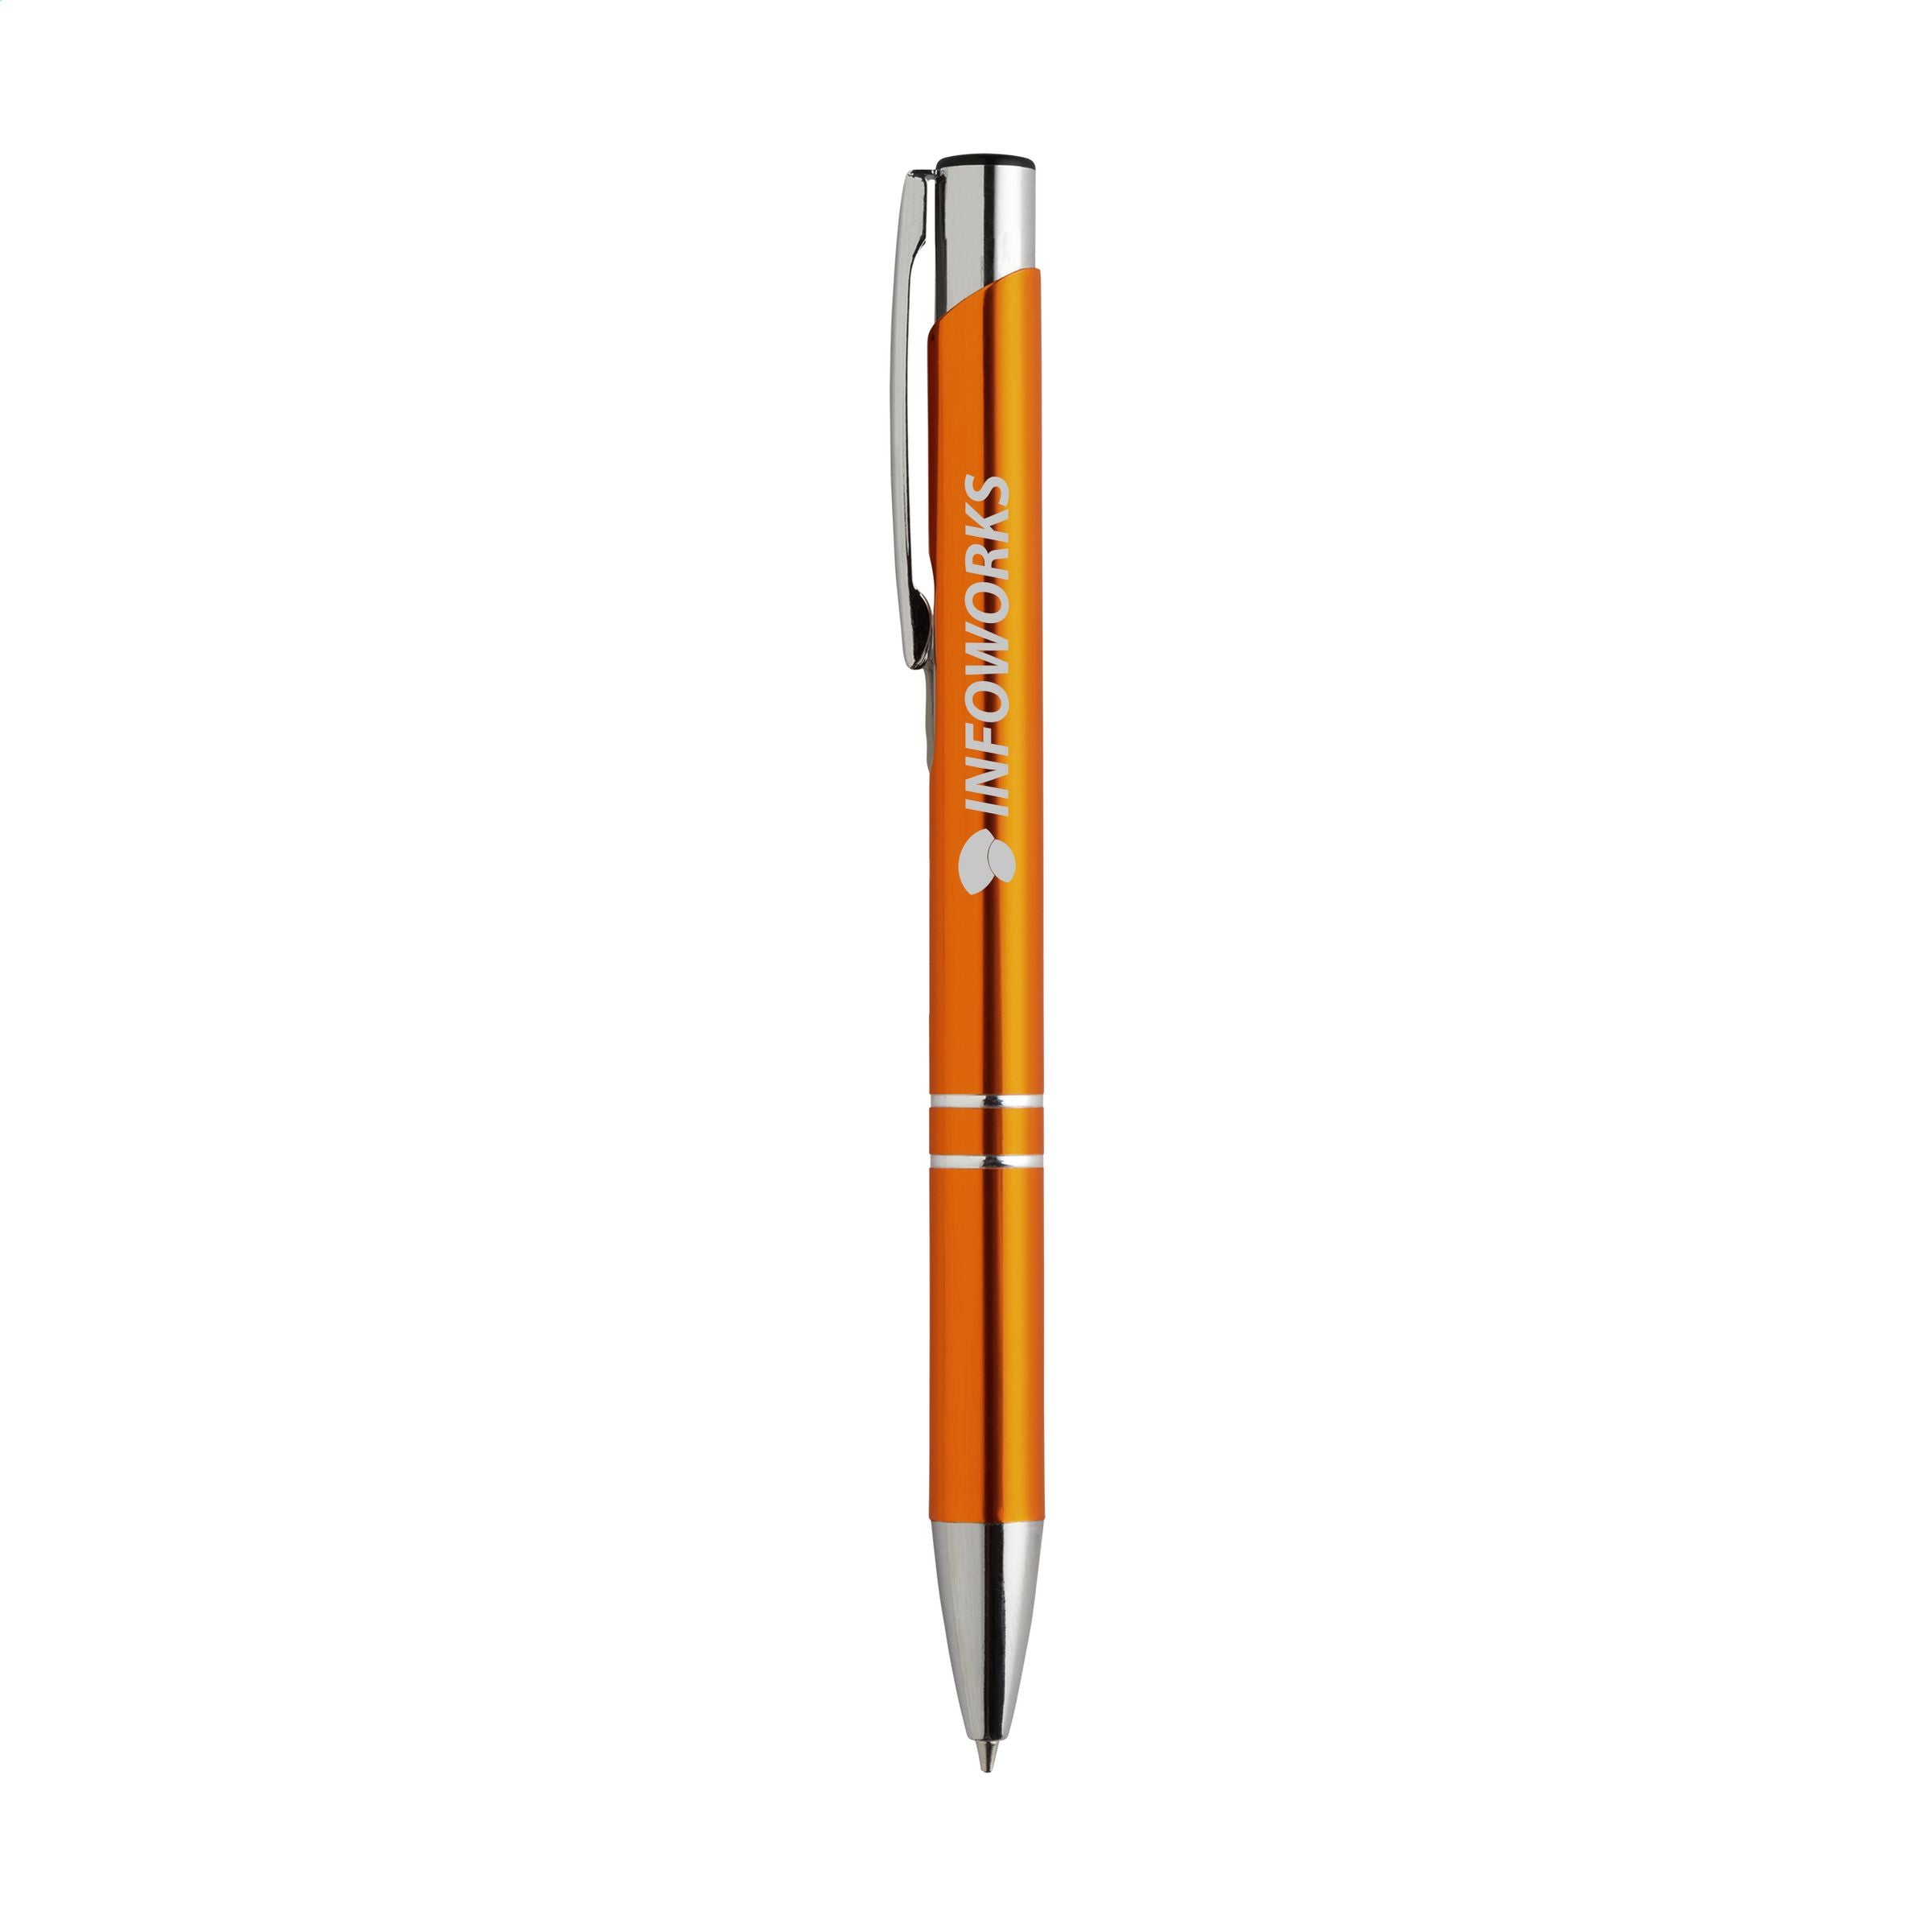 Metallic Shiny pen